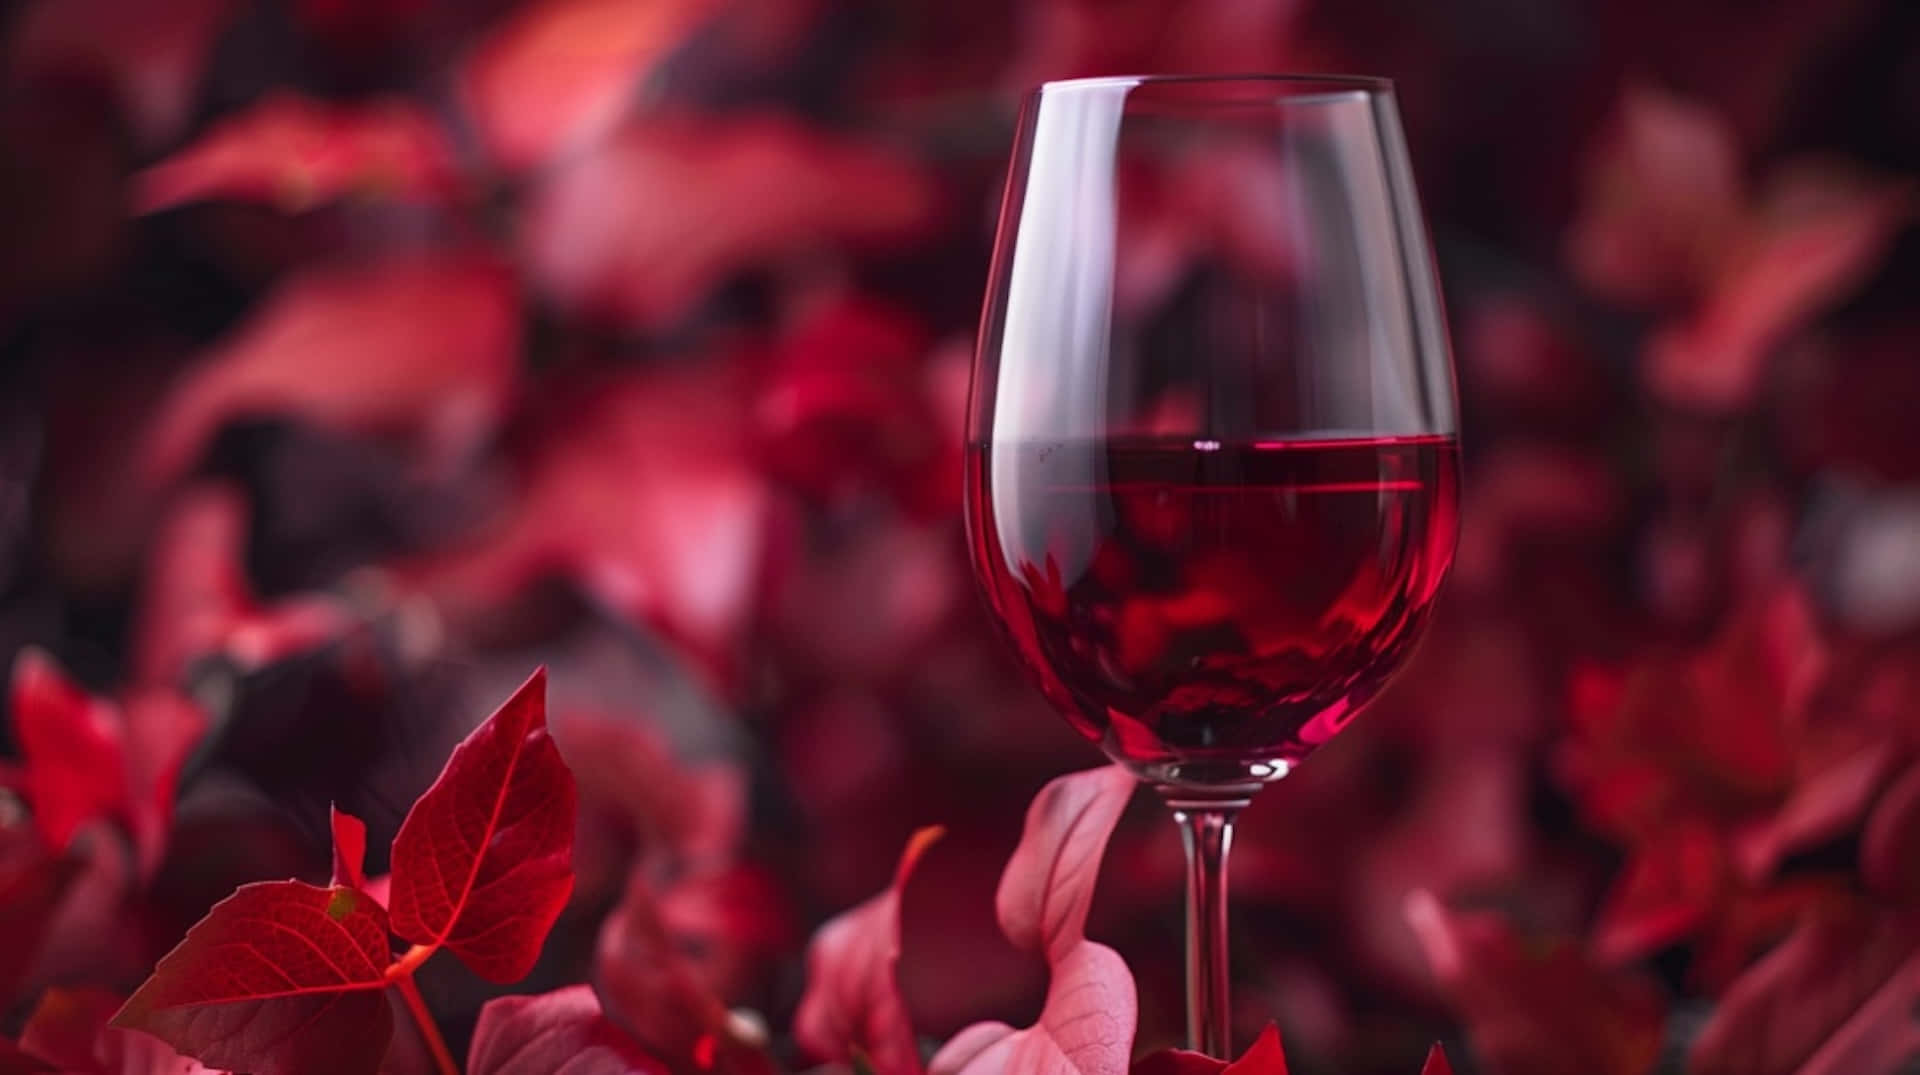 Burgundy Wine Glass Among Red Leaves Wallpaper